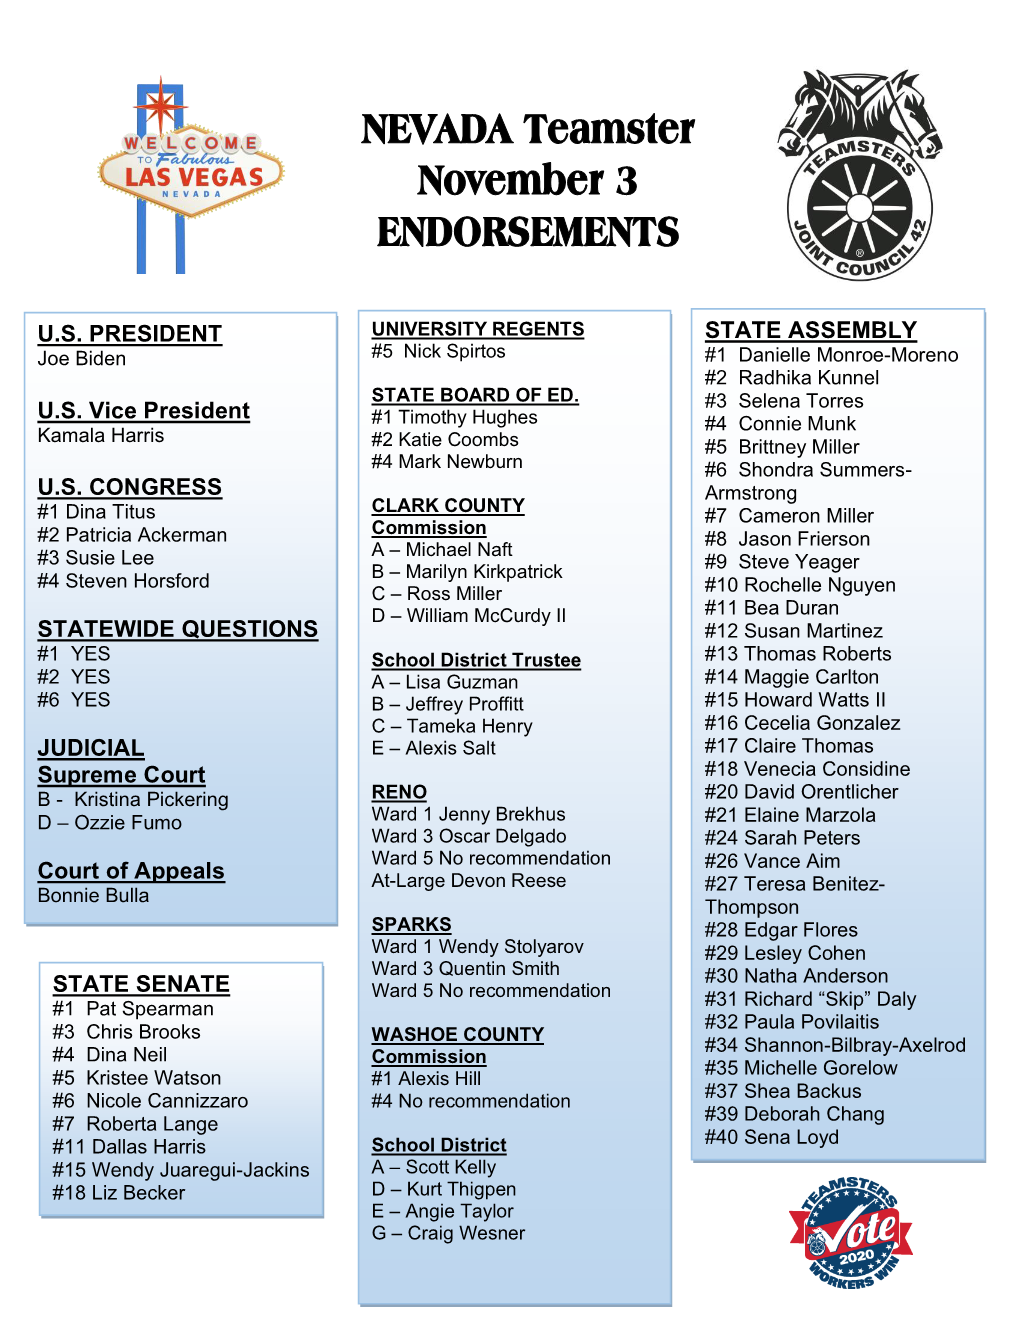 NEVADA Teamster November 3 ENDORSEMENTS